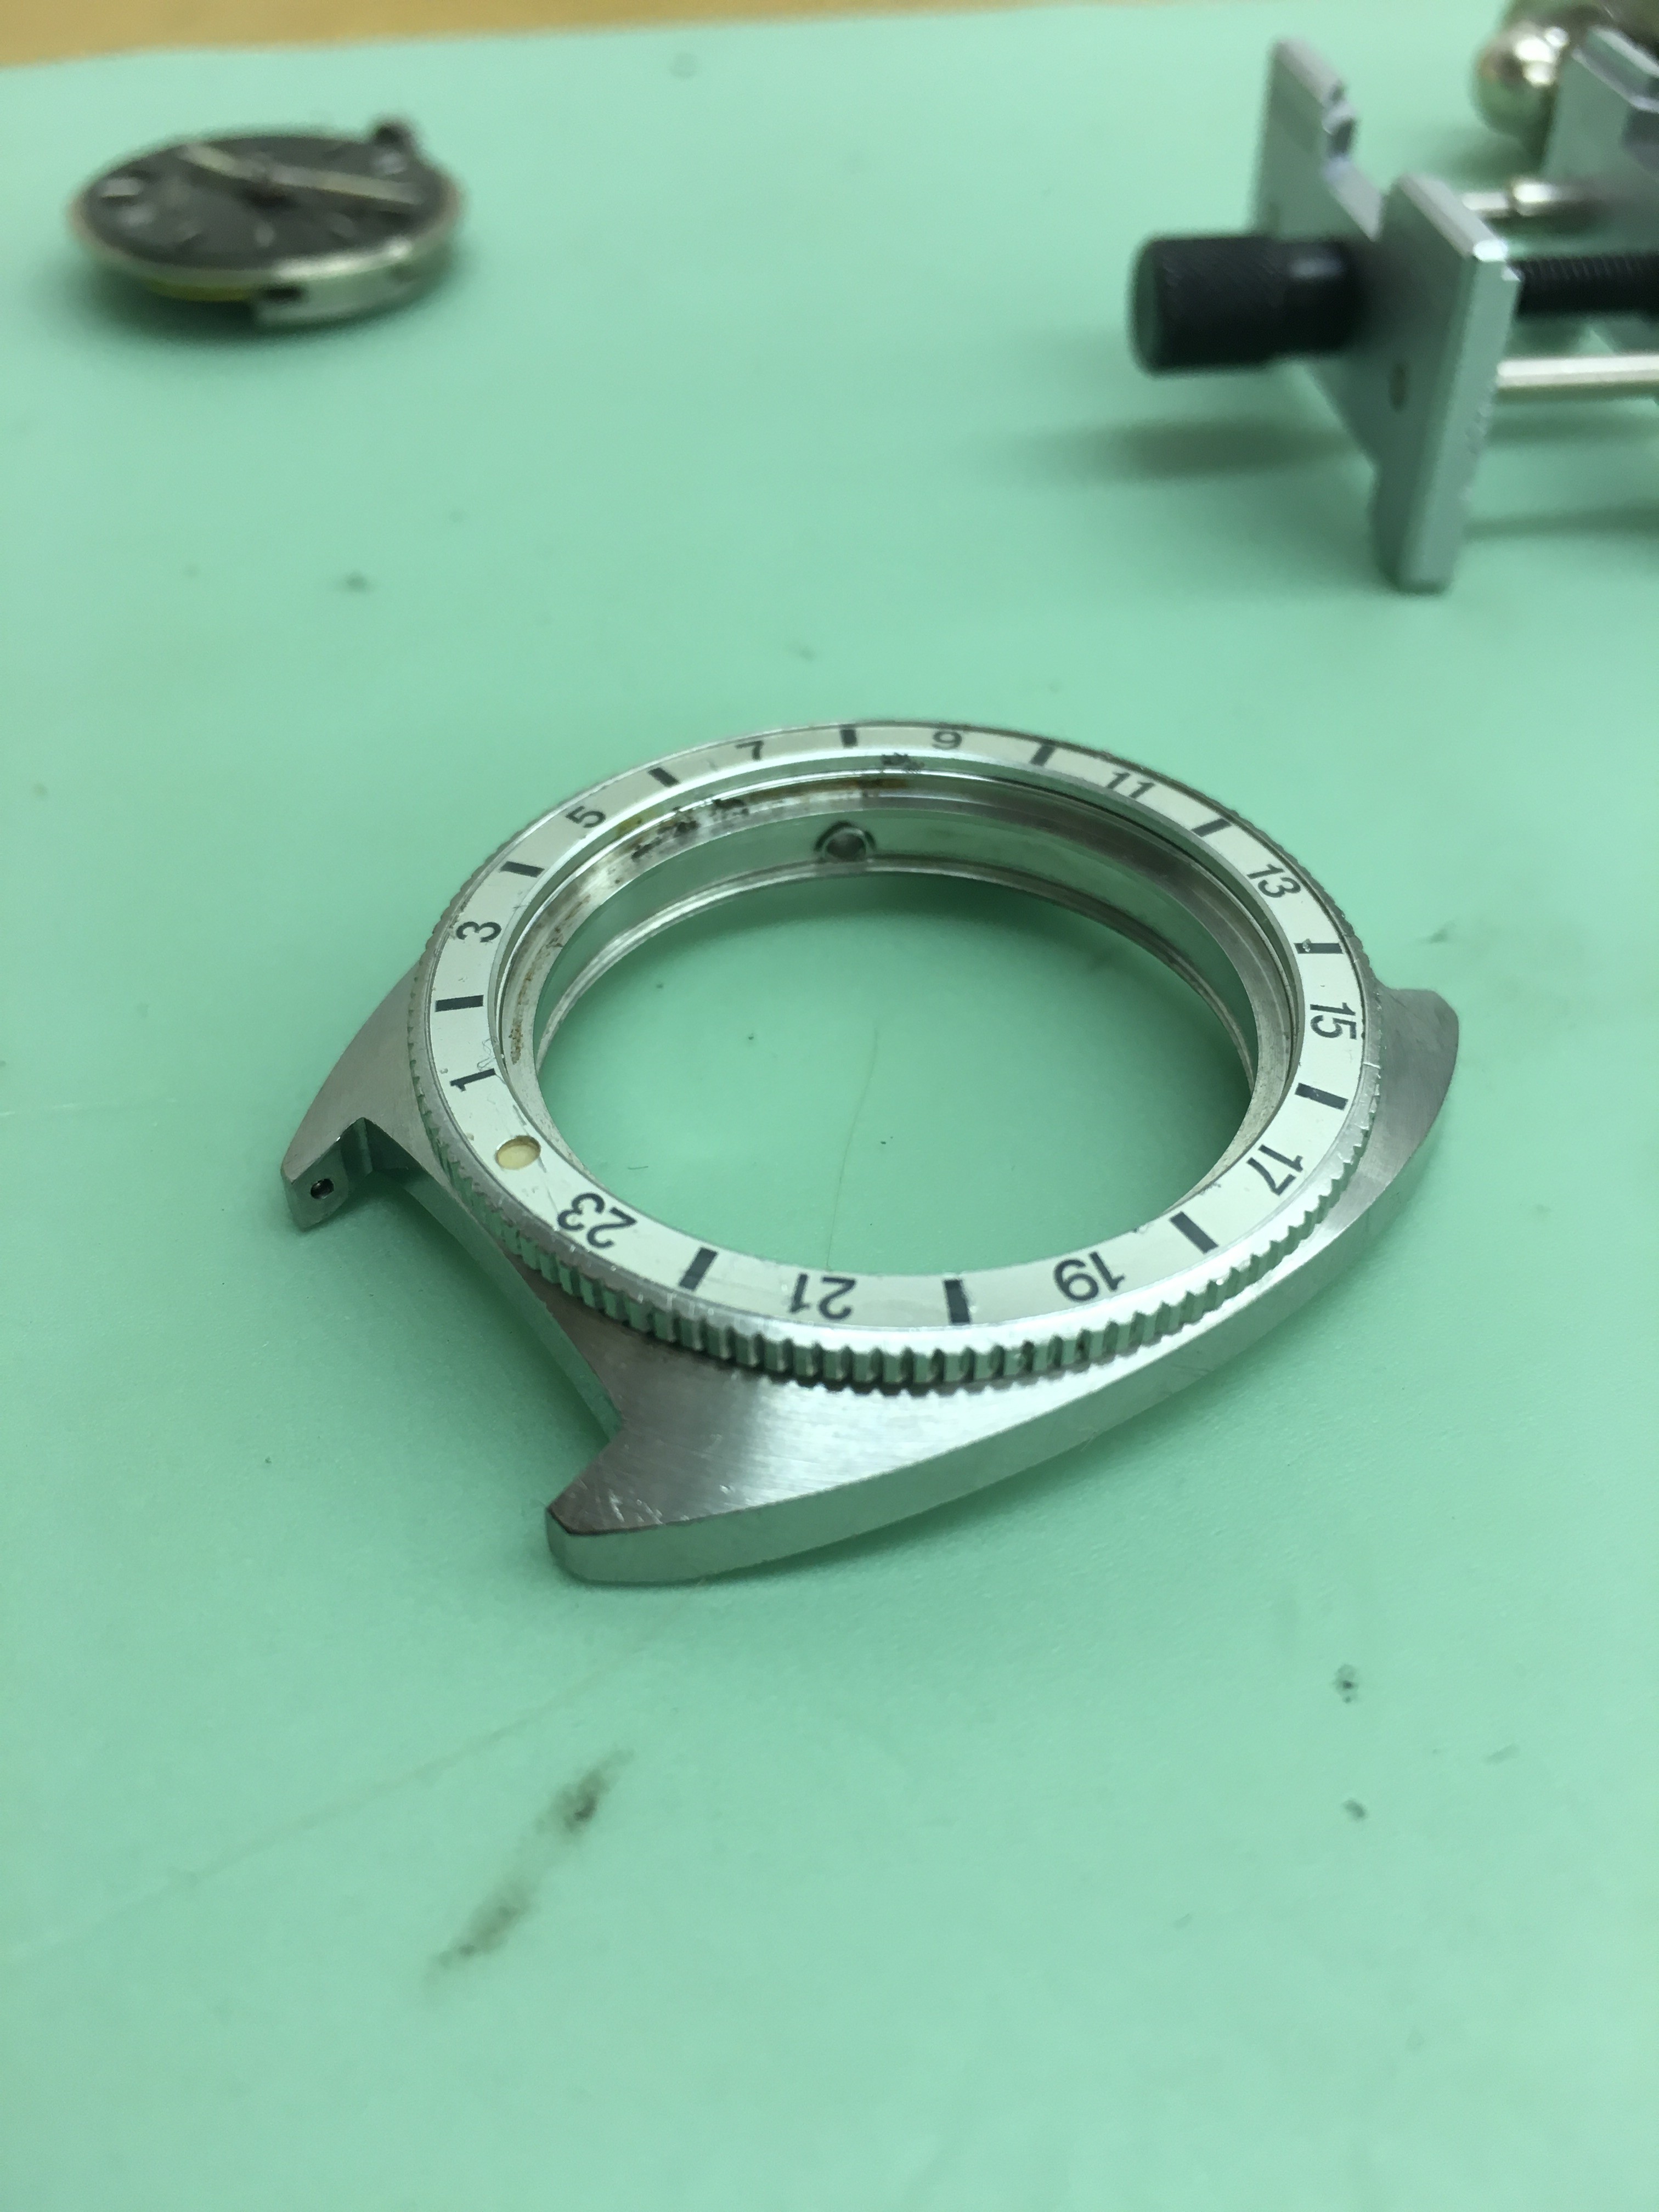 Restoring a Classic Seiko Navigator Timer (6117-8000) Part 1